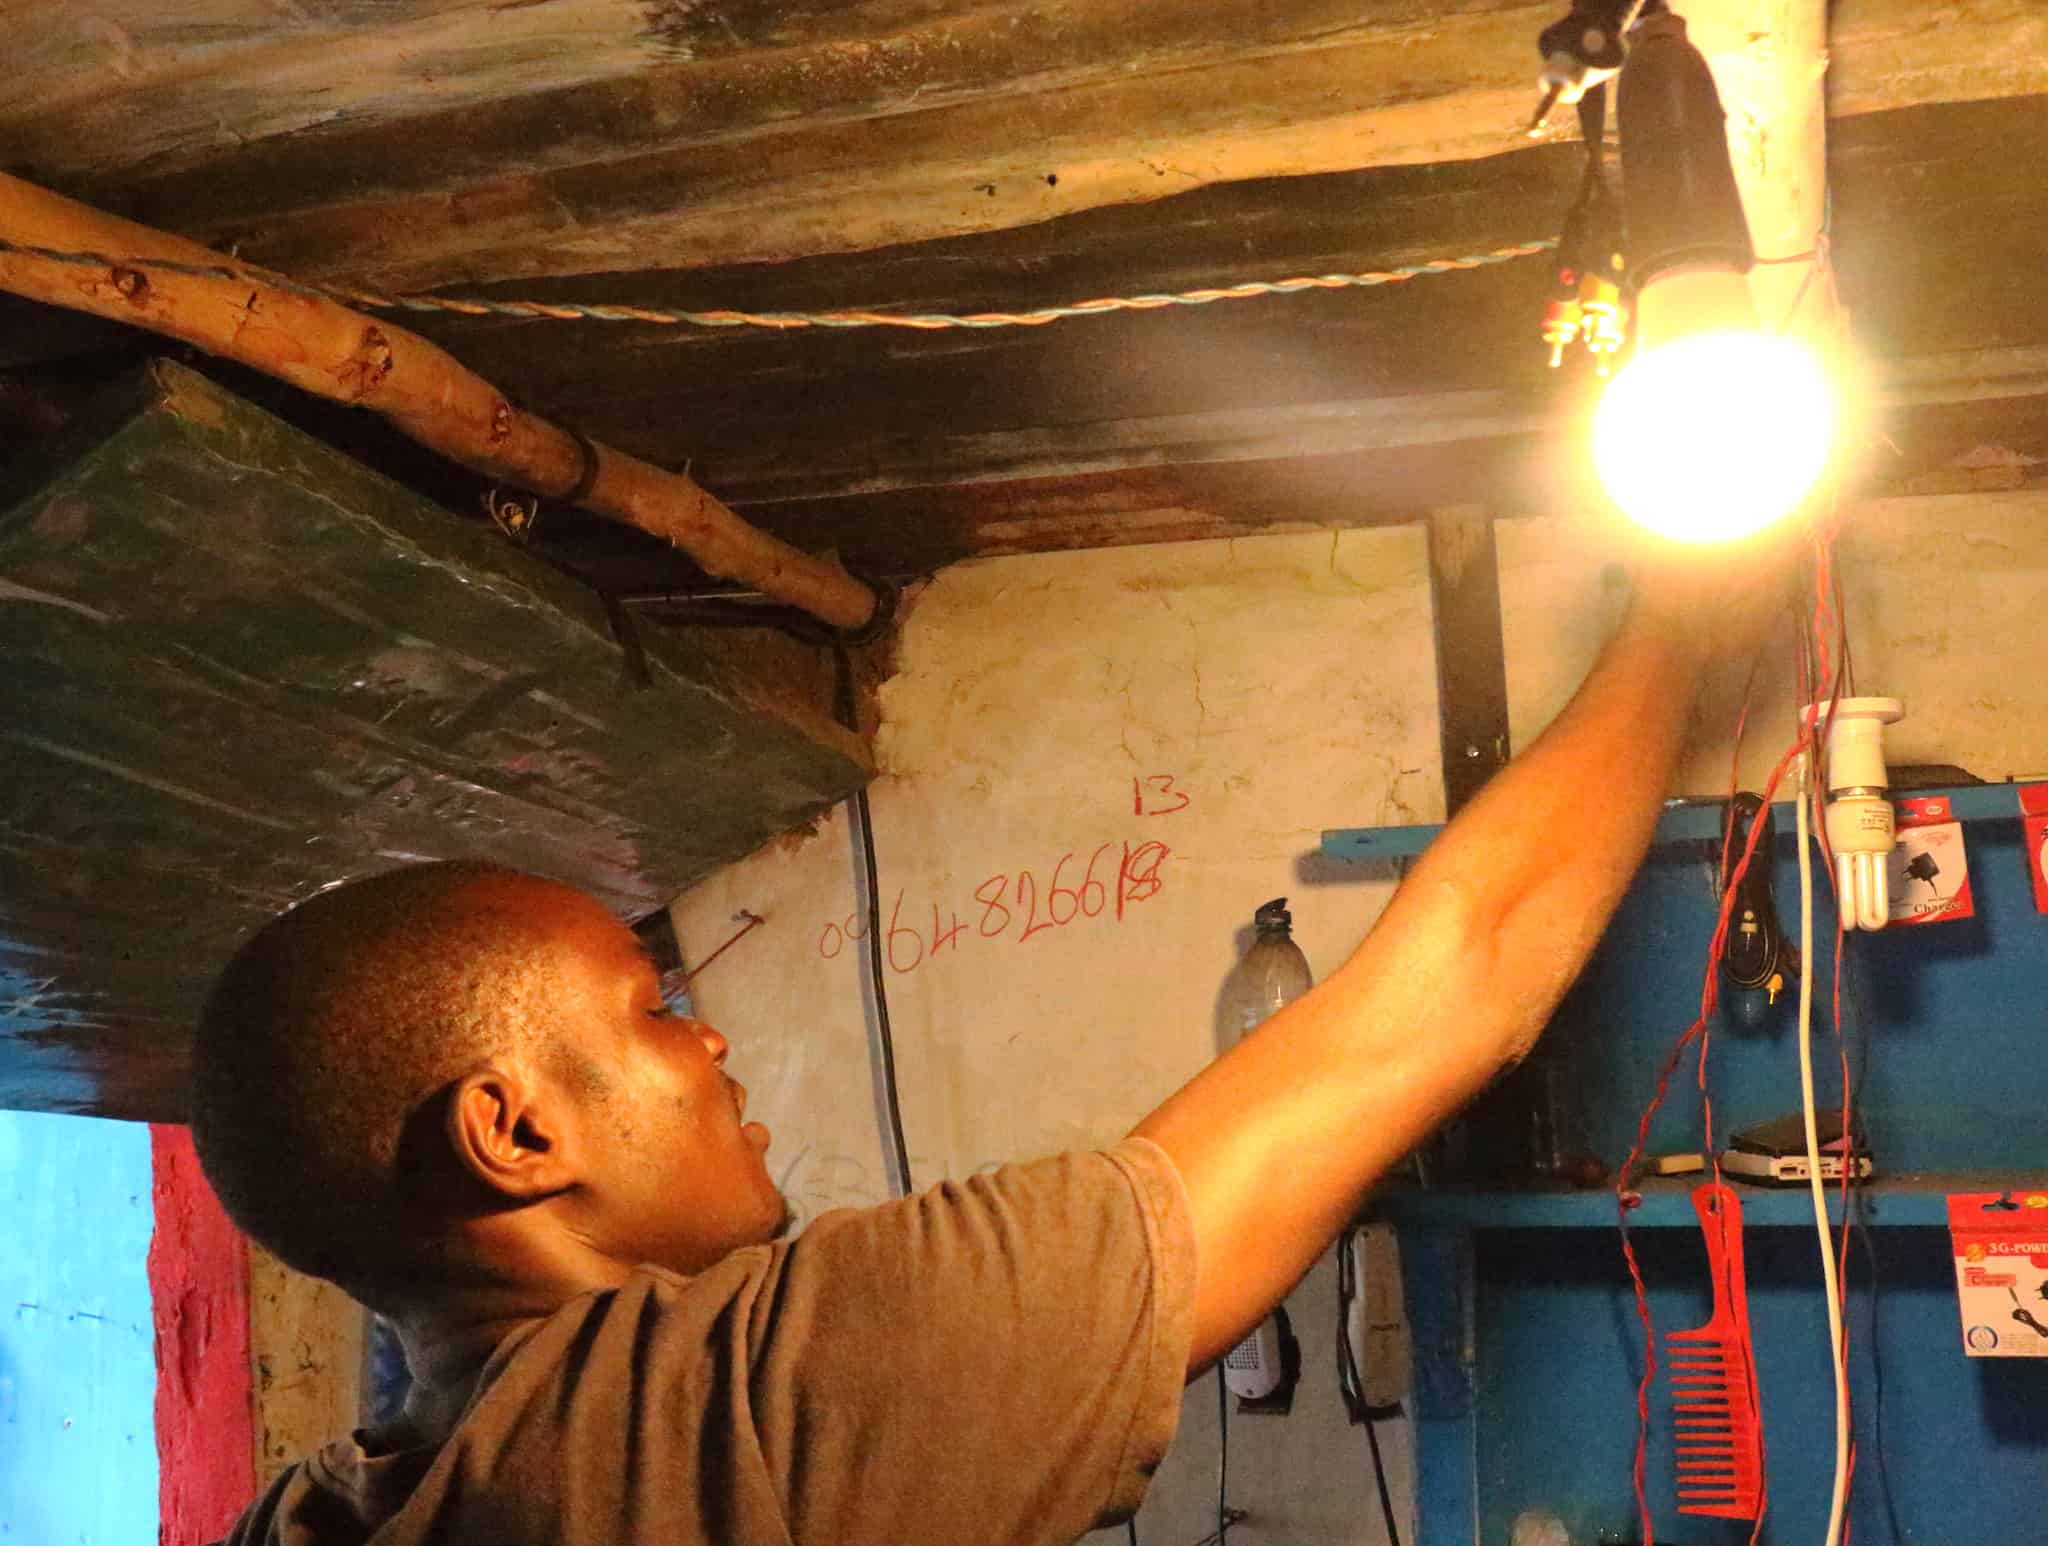 A man adjusts a lightbulb